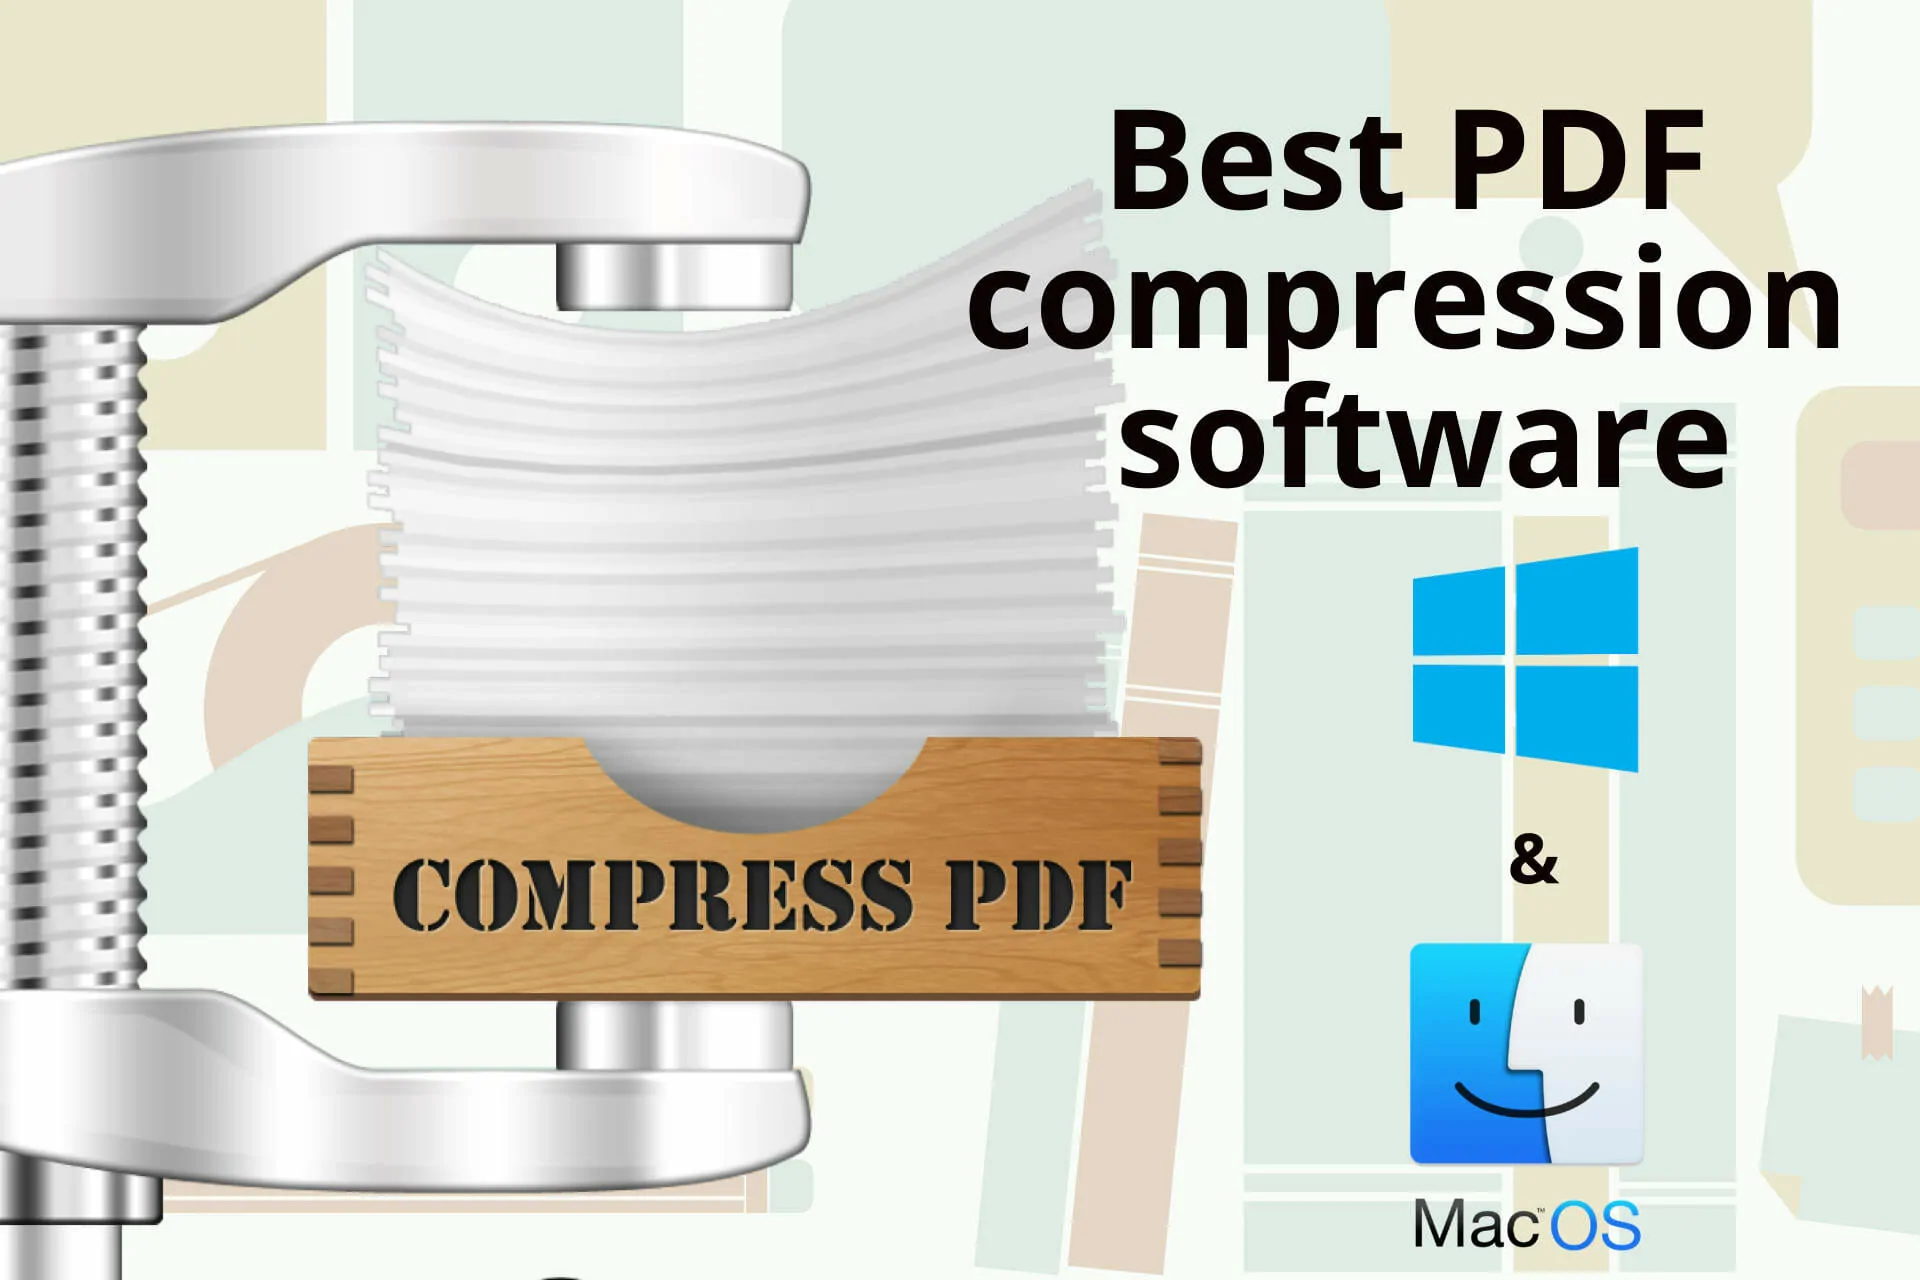 Top 5 Best PDF compression software